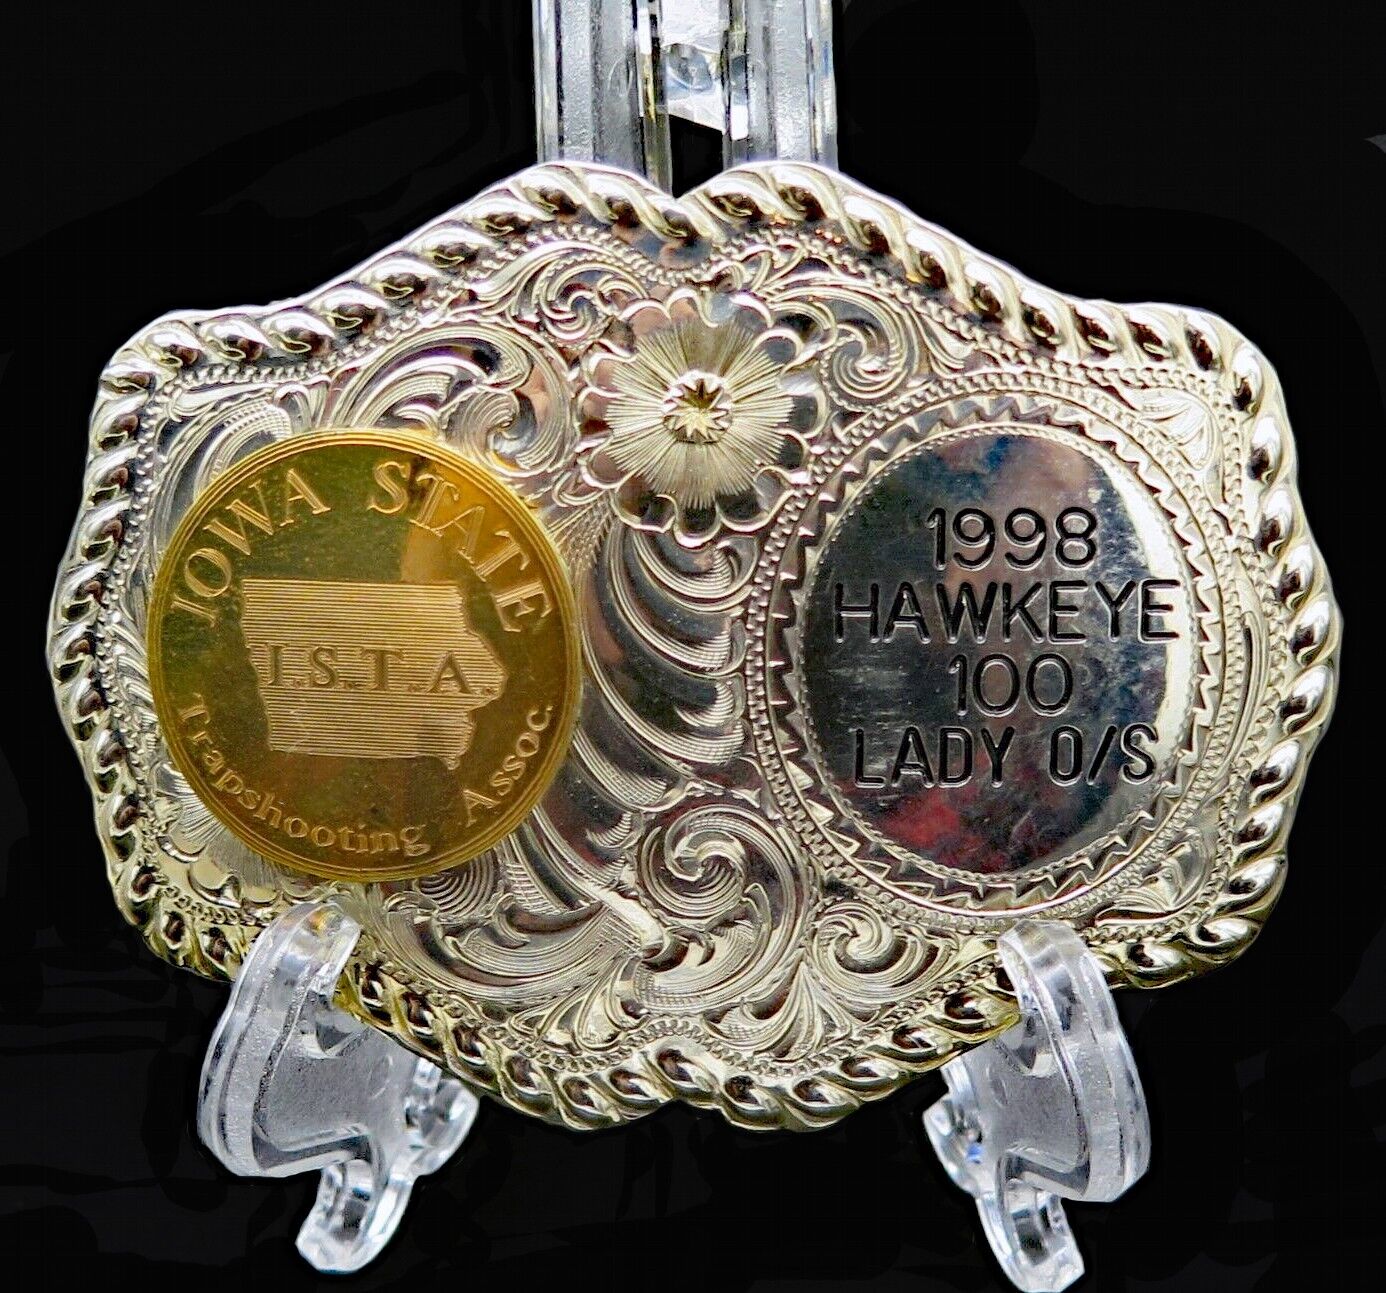 Iowa State Trap Shooting 1998 Hawkeye 100 Lady O/S Trophy Award Belt Buckle